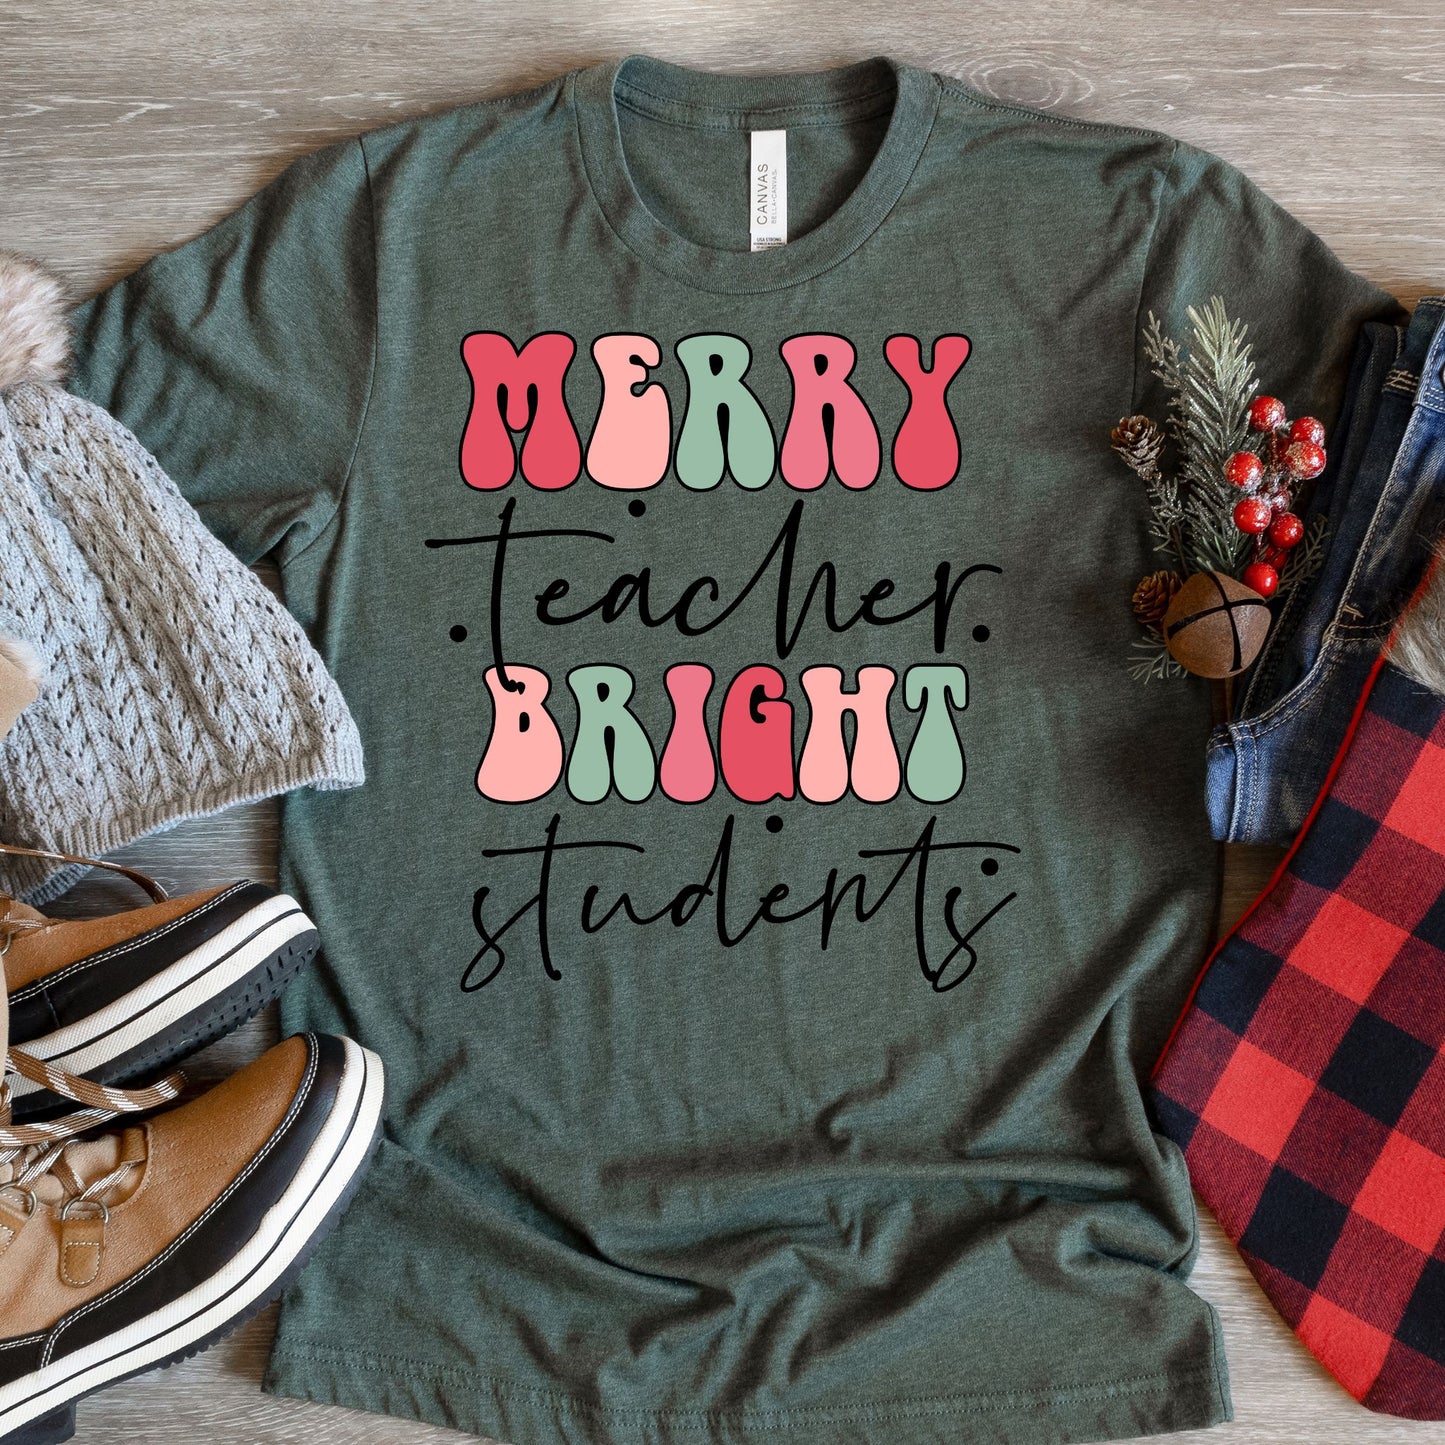 Merry Teacher Bright Students Tee